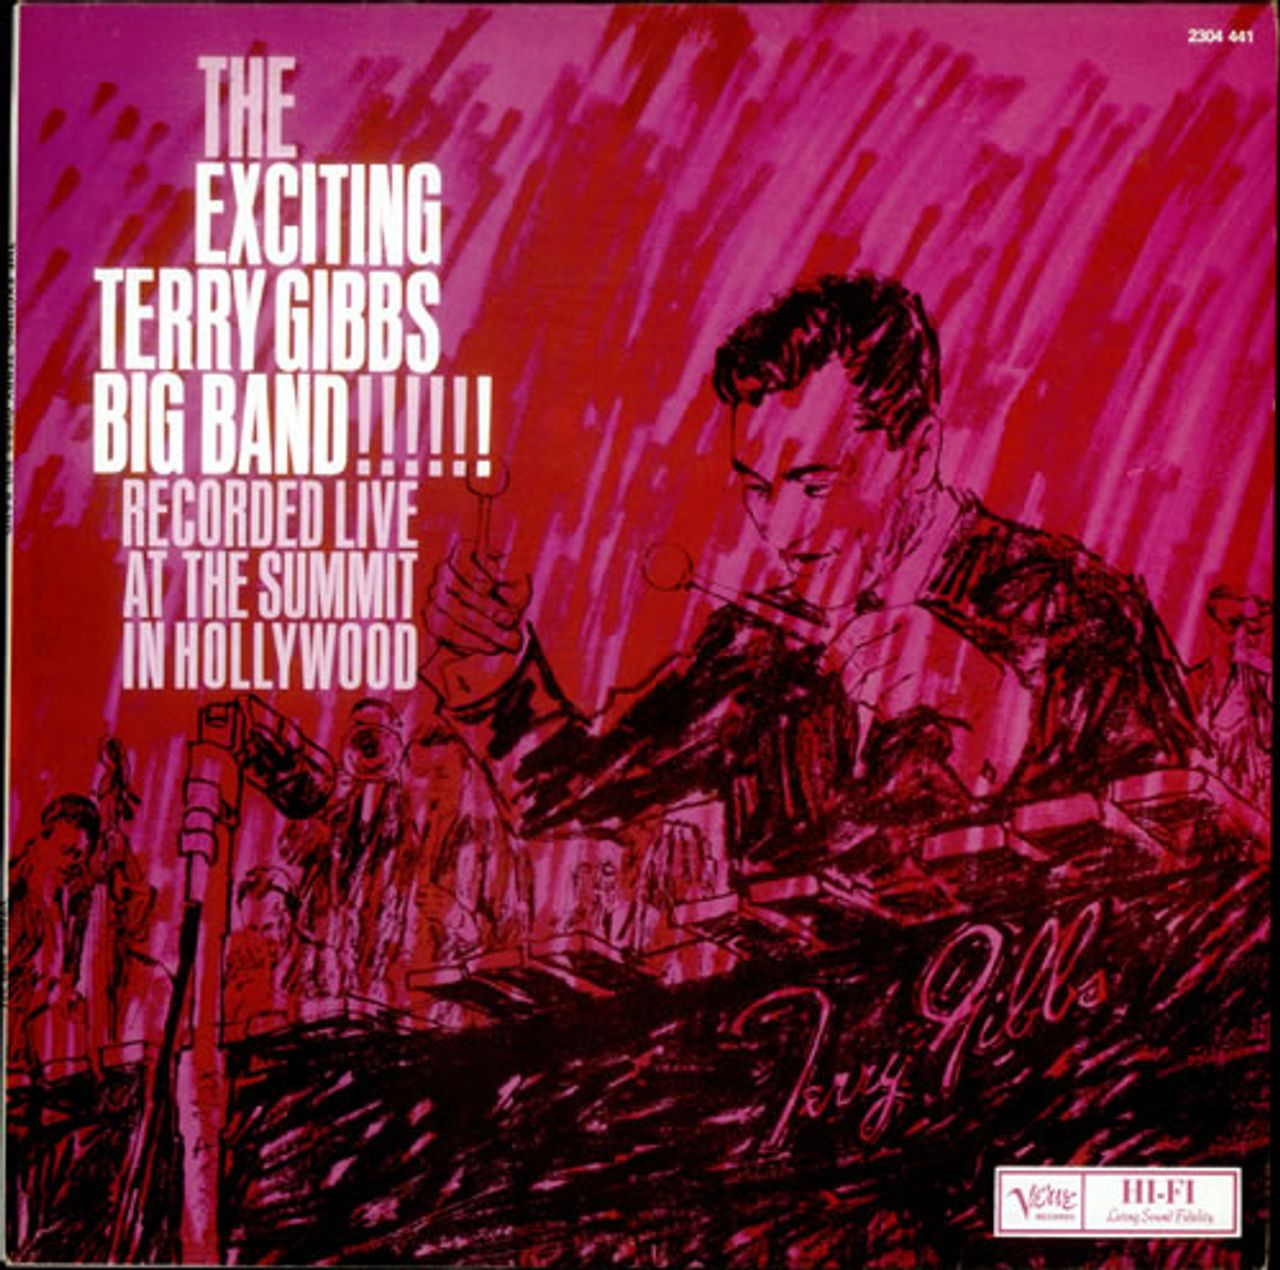 Terry Gibbs The Exciting Terry Gibbs Big Band!!!!!! French vinyl LP album (LP record) 2304441